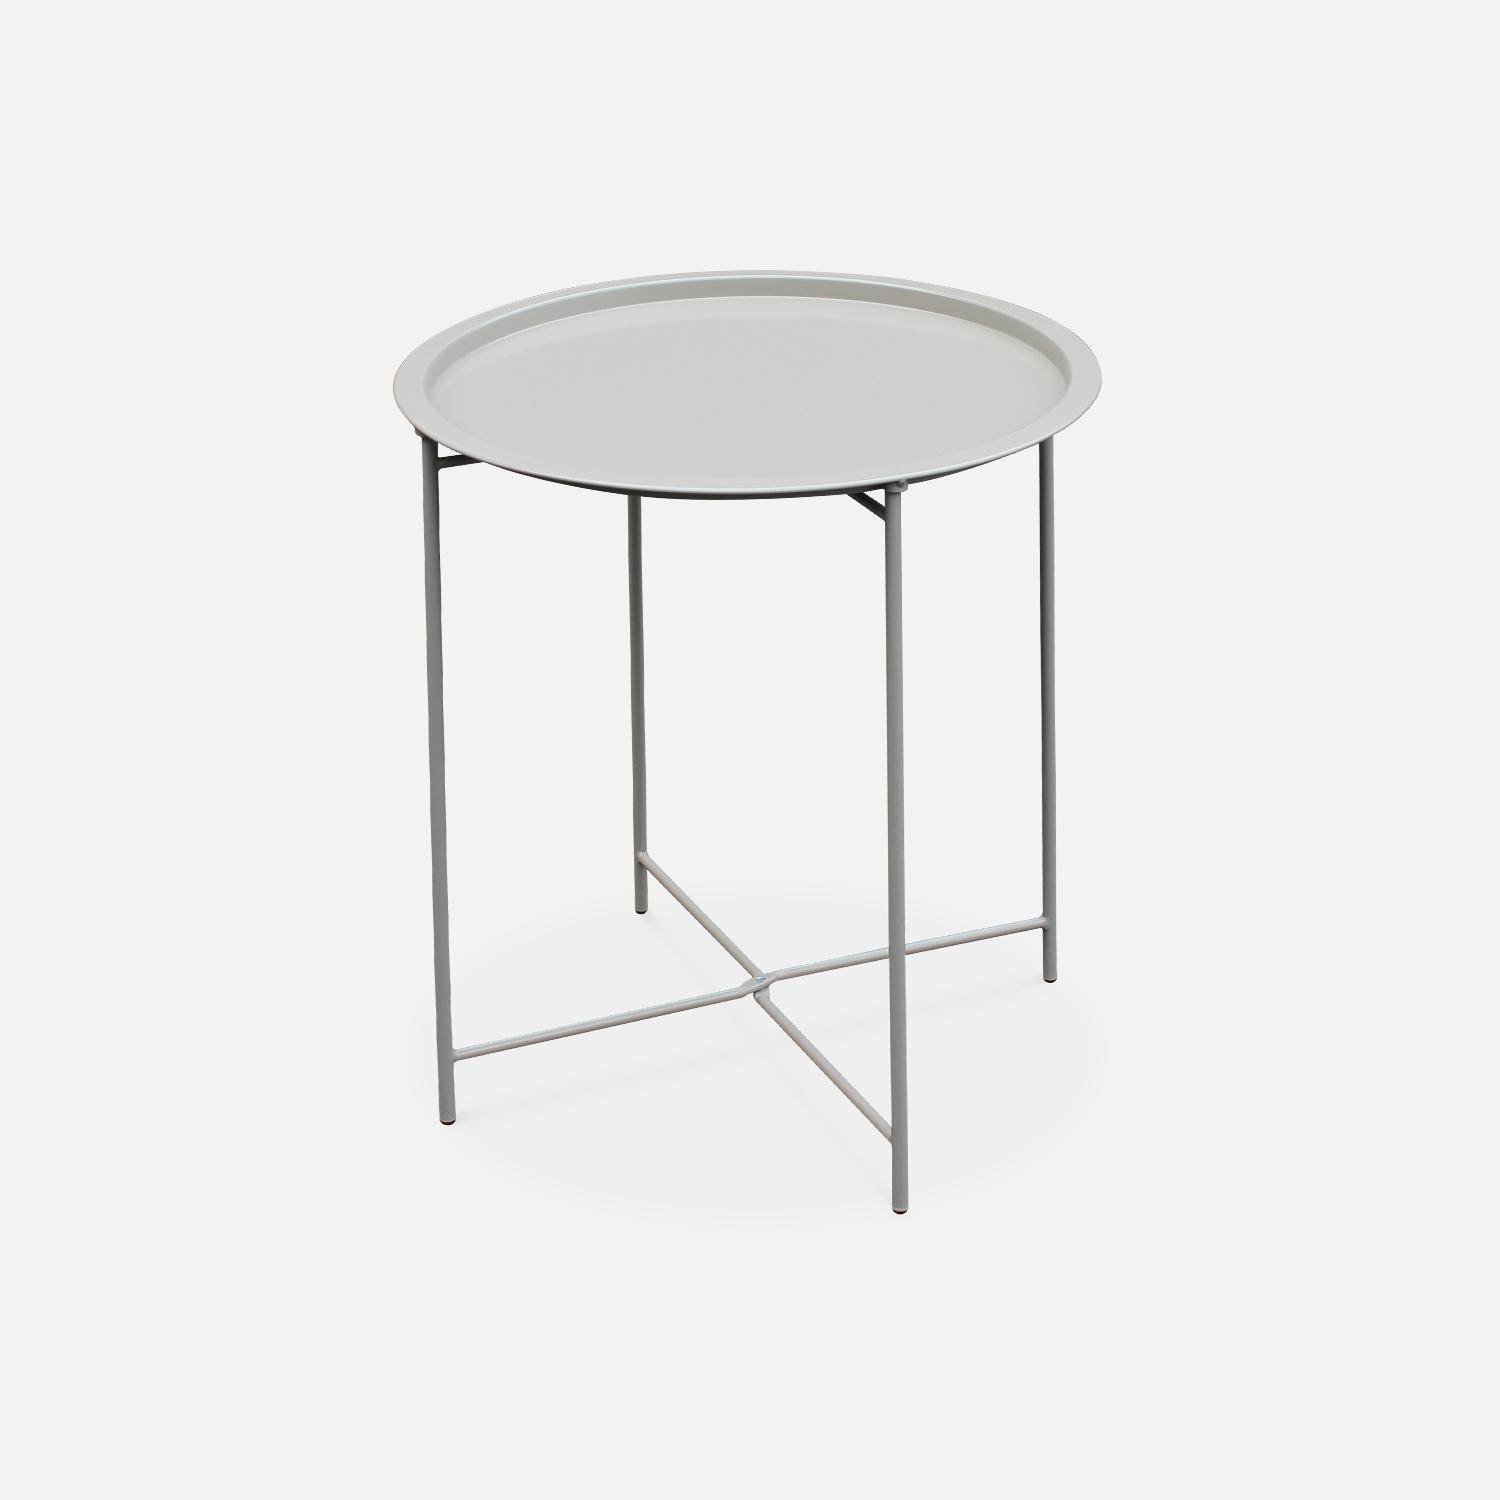 Table basse ronde – Alexia gris taupe – Table d'appoint ronde Ø46cm, acier thermolaqué Photo2